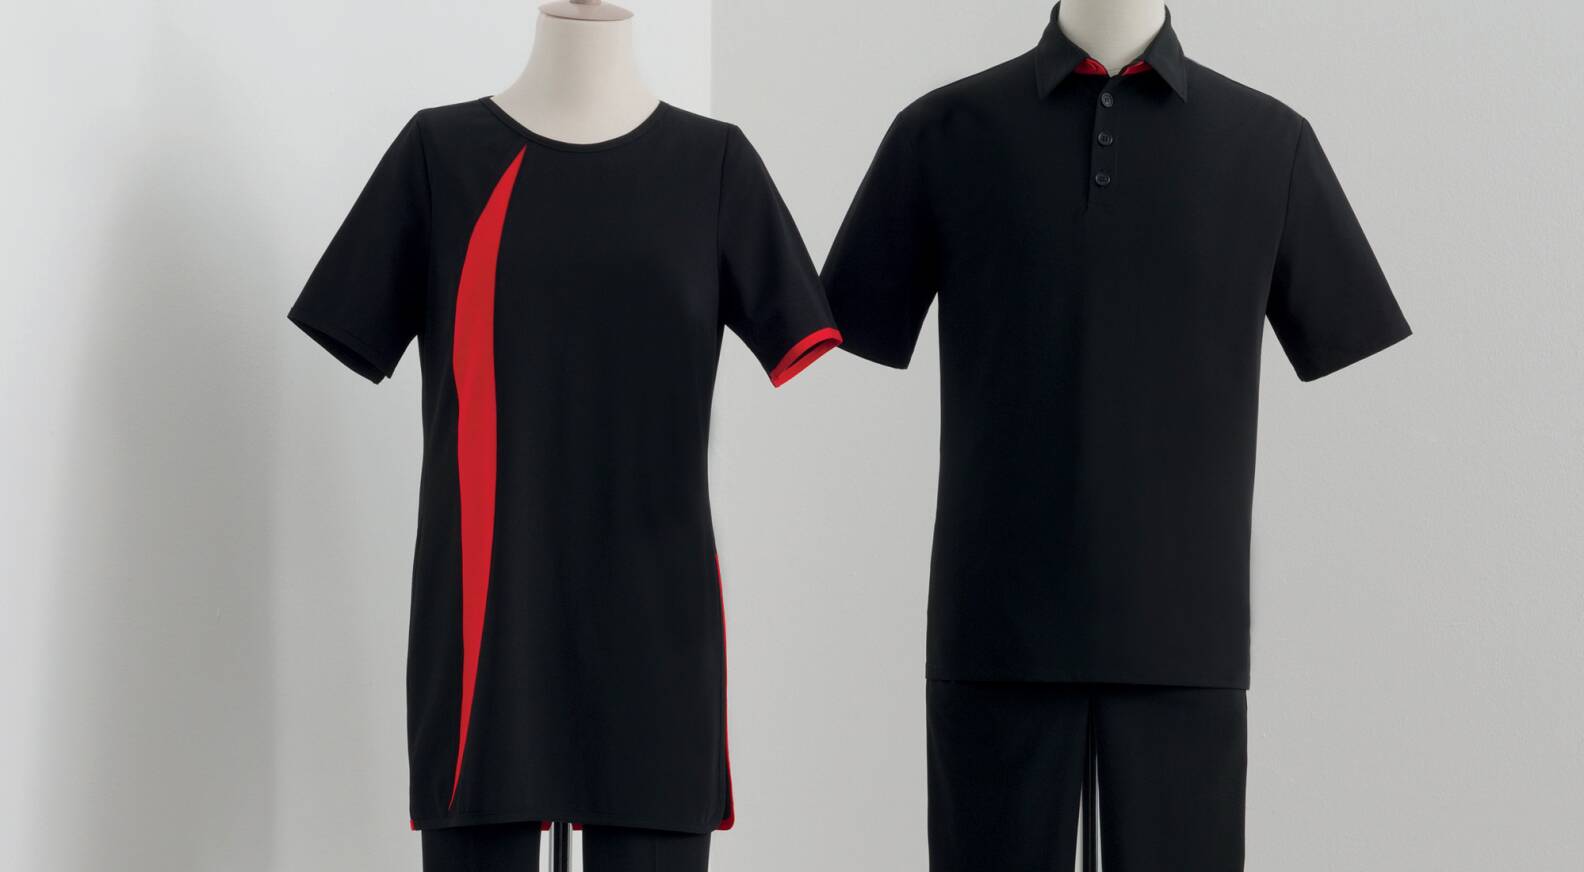 New Sephora uniforms designed with CSM LVMH